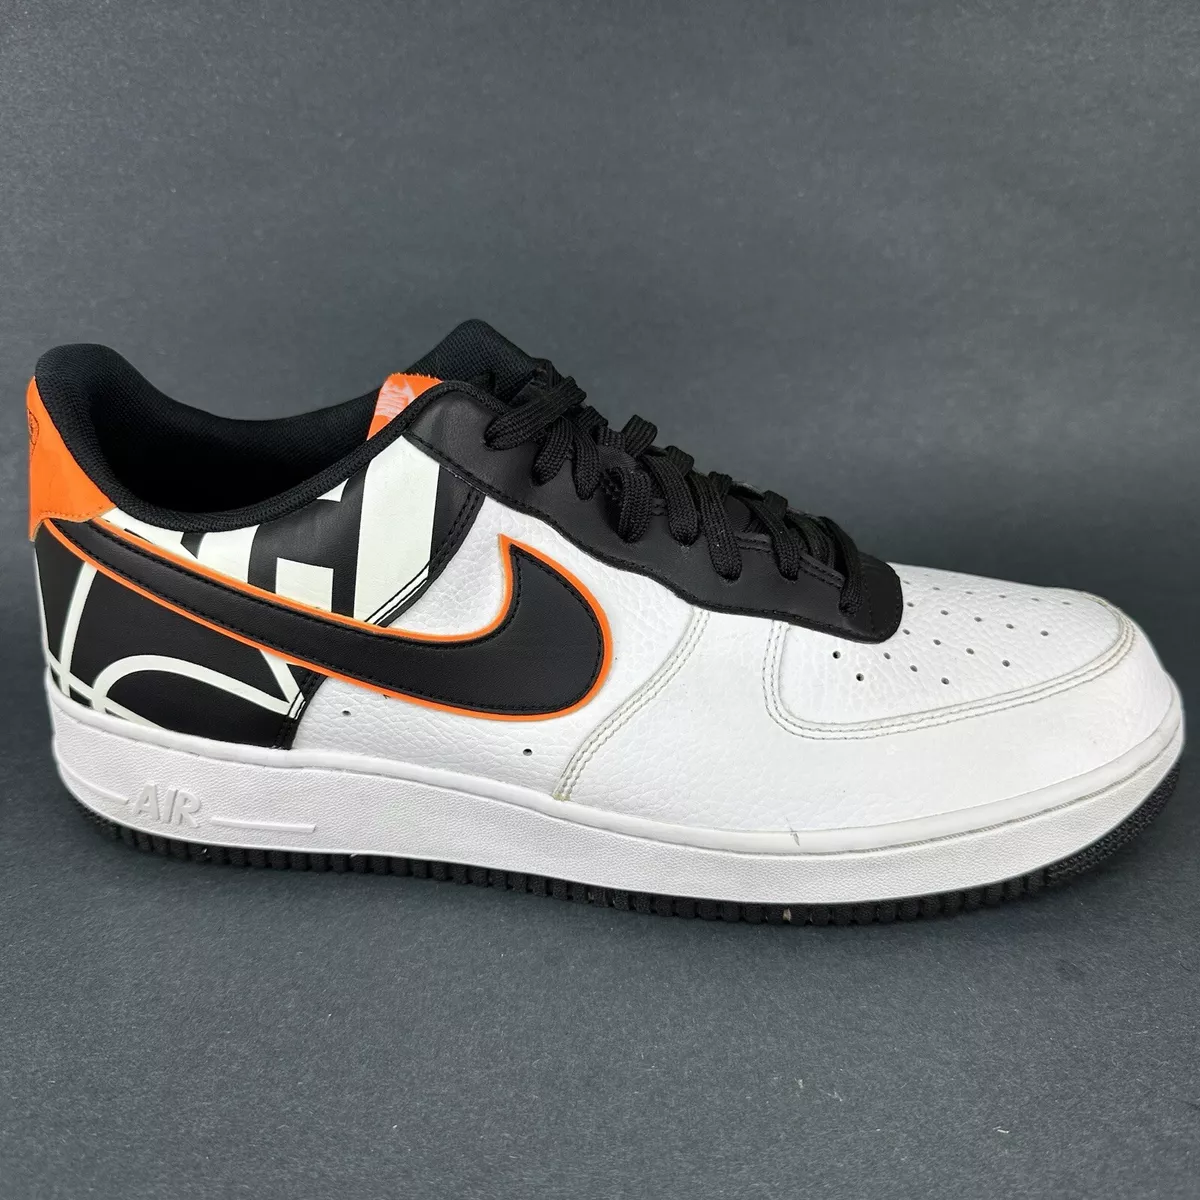 Nike Air Force 1'07 LV8 Low White Black Orange 823511-104 Men's  Size 13